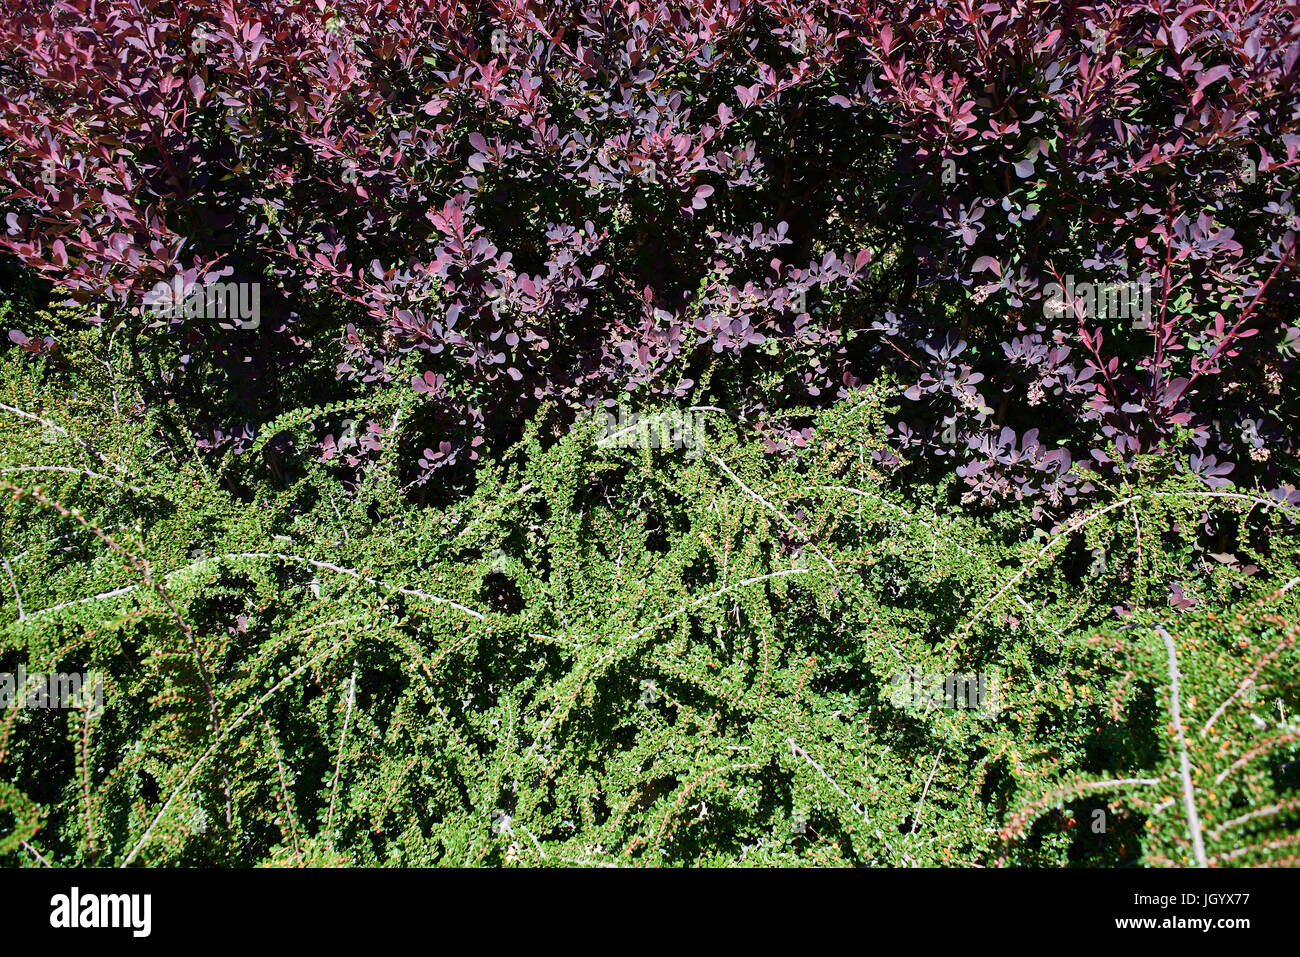 Flowering Cotoneaster and Berberis in spring garden Stock Photo